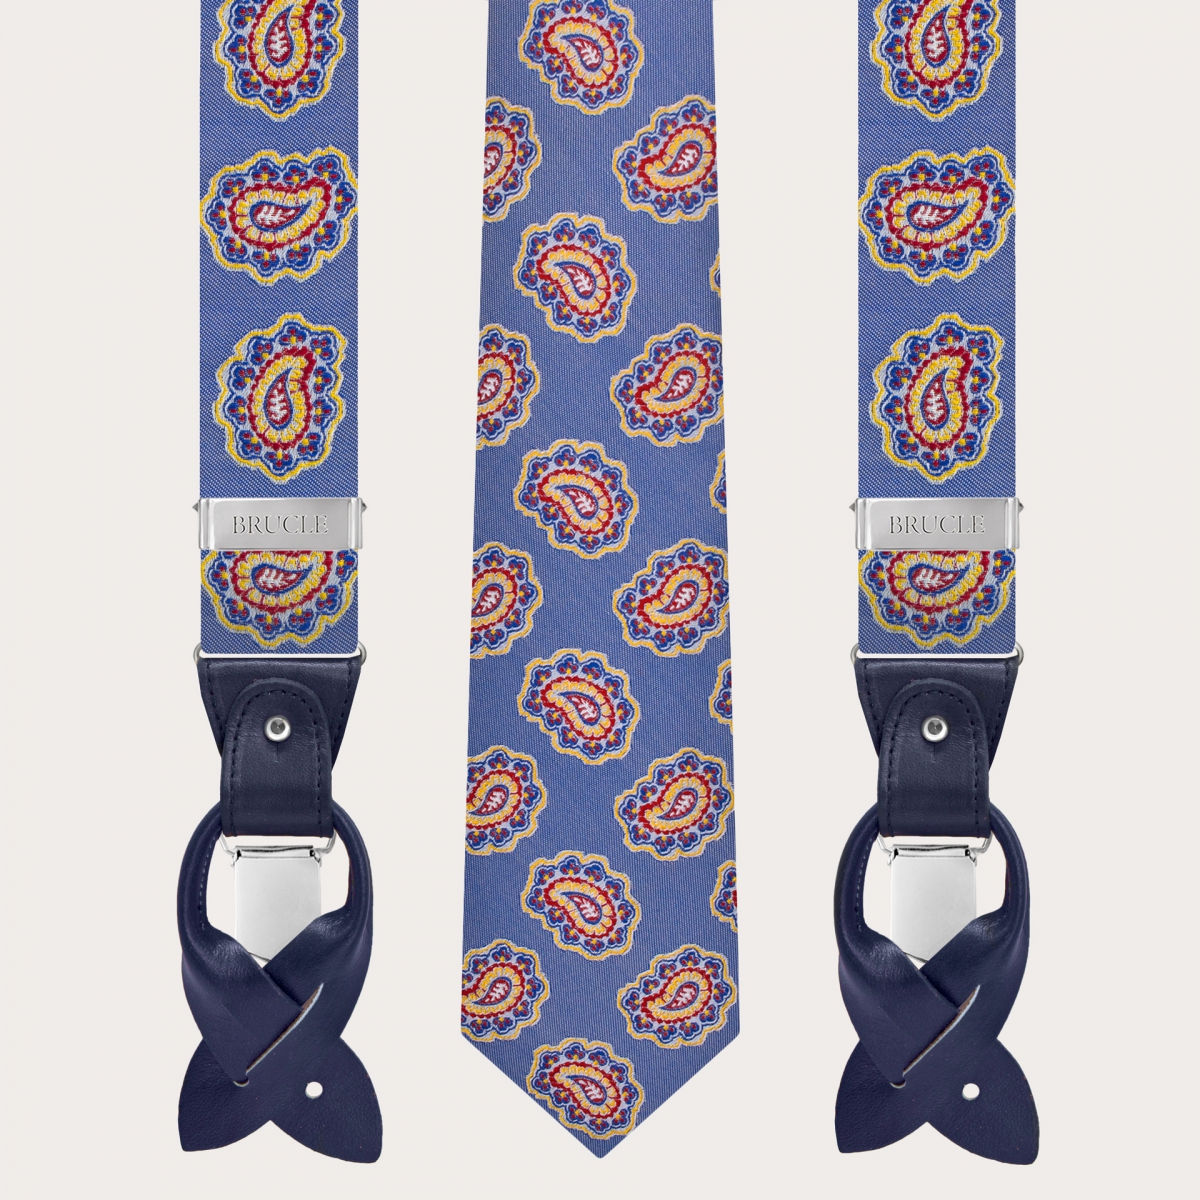 Abgestimmte Hosenträger und Krawatte aus Seide, blau paisley